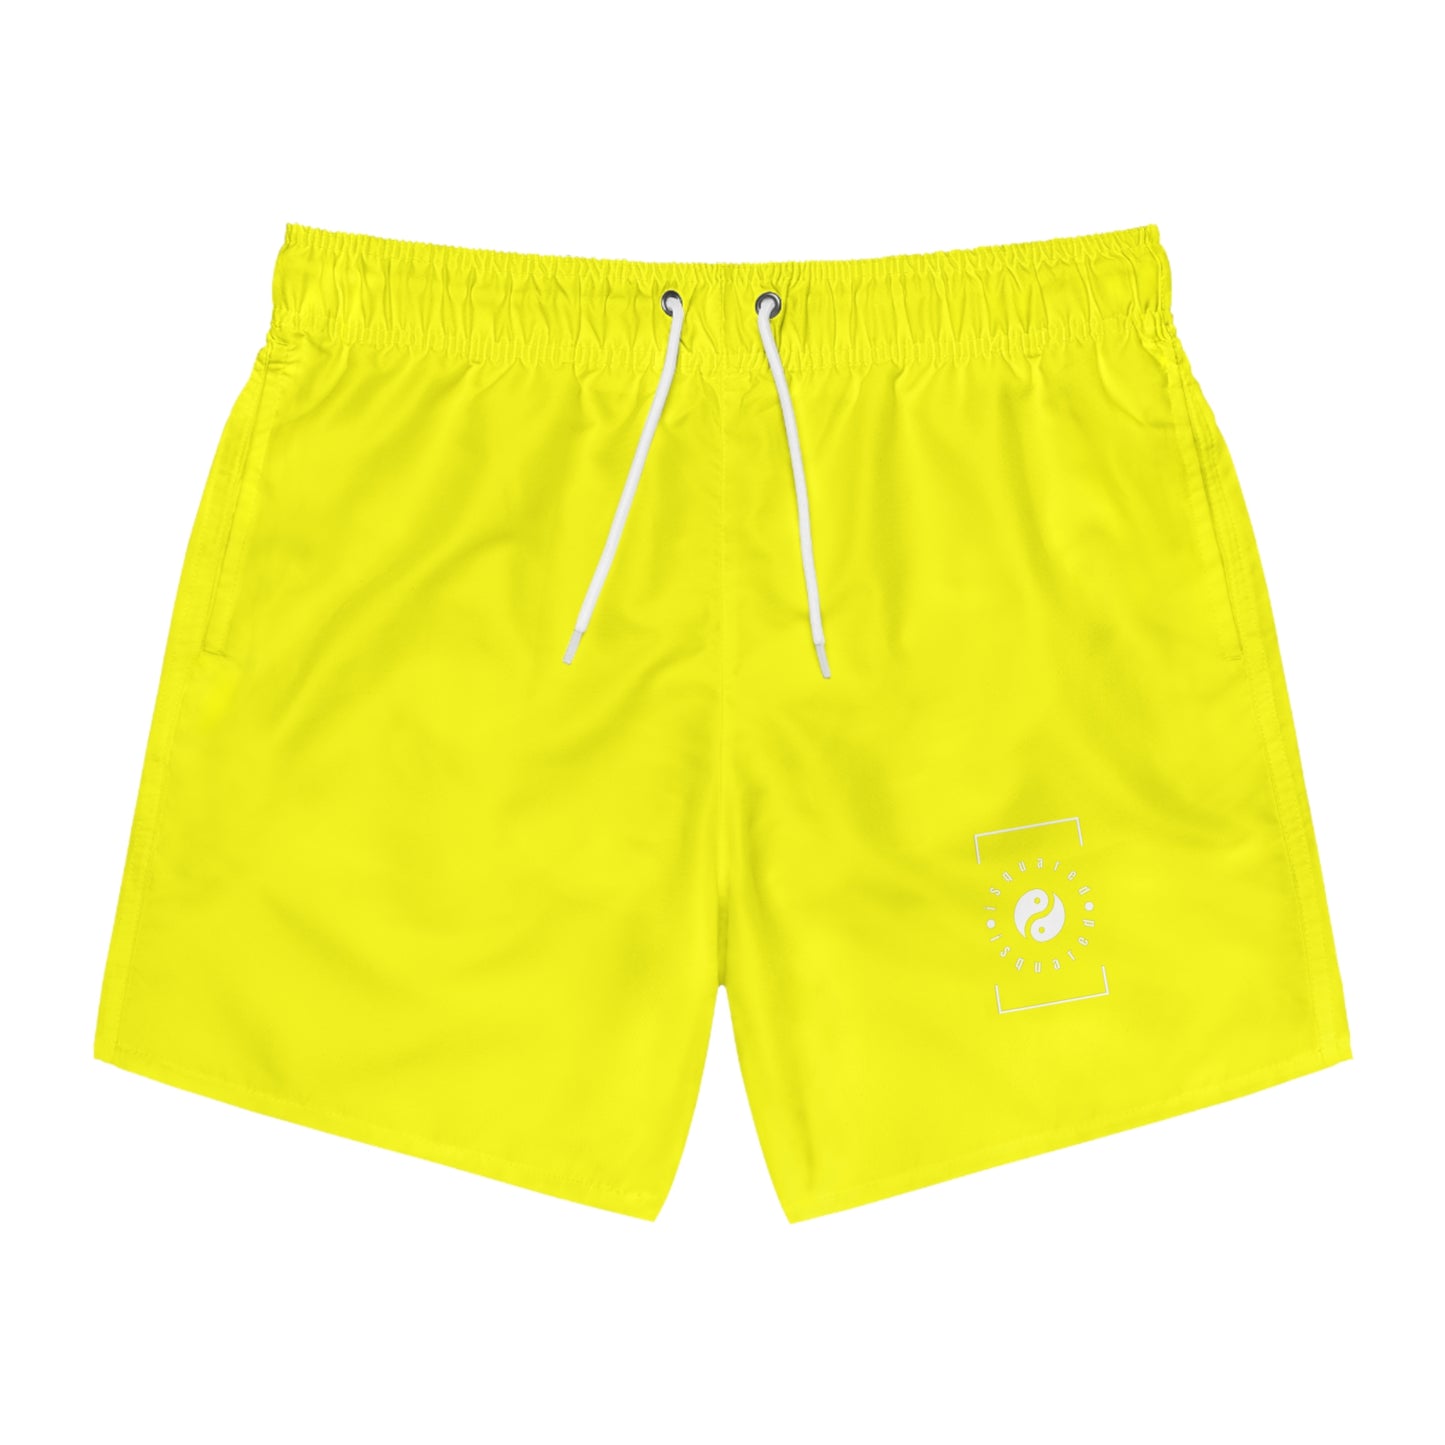 Neon Yellow FFFF00 - Swim Trunks for Men